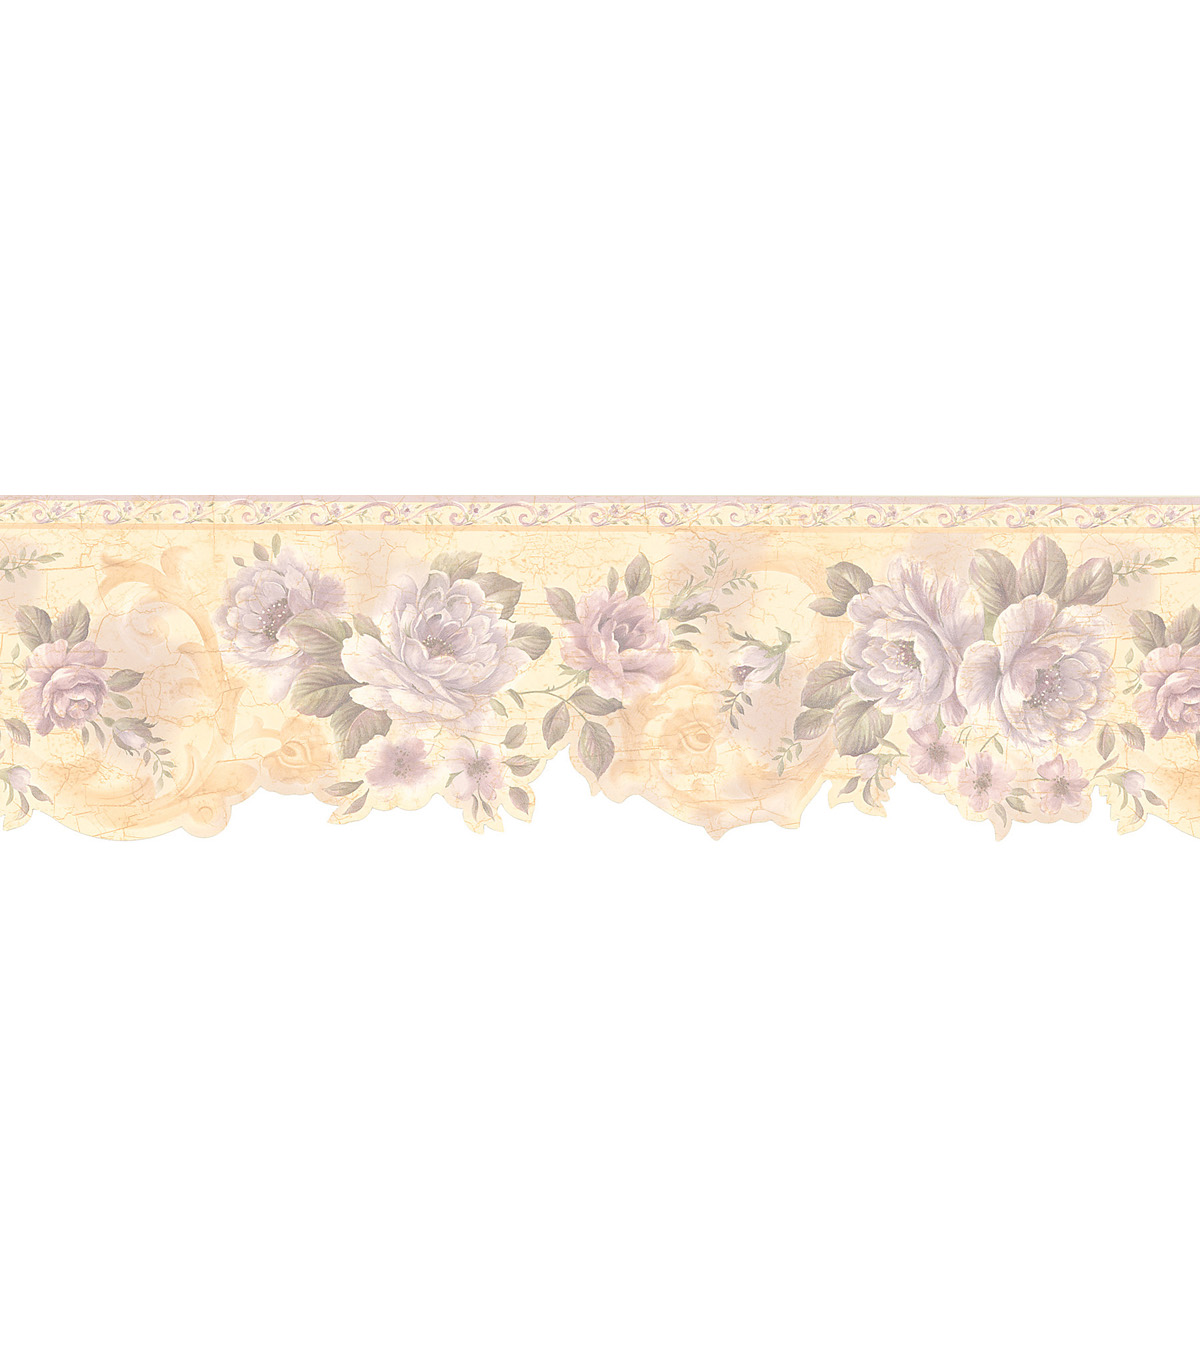 Flower Scroll Die Cut Wallpaper Border Cream Sampleflower